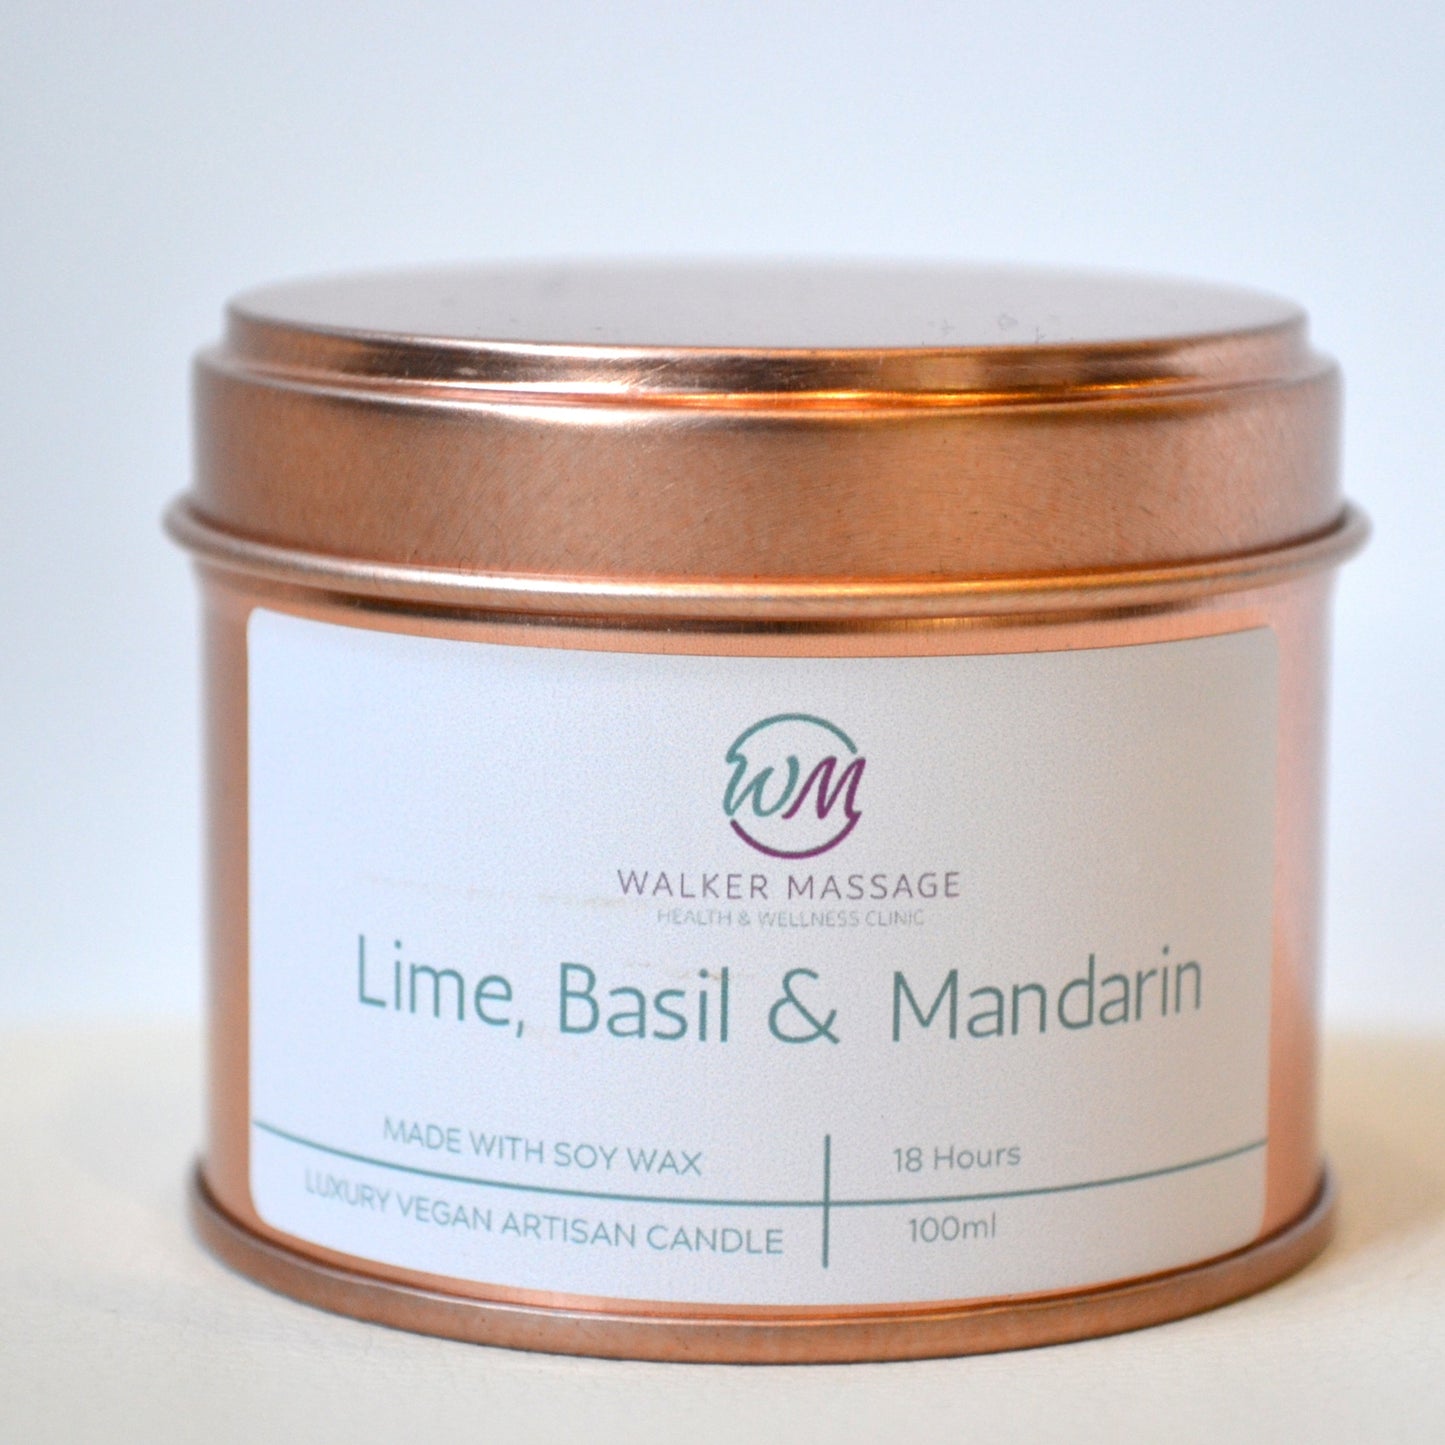 Lime, Basil & Mandarin Tin - 100ml